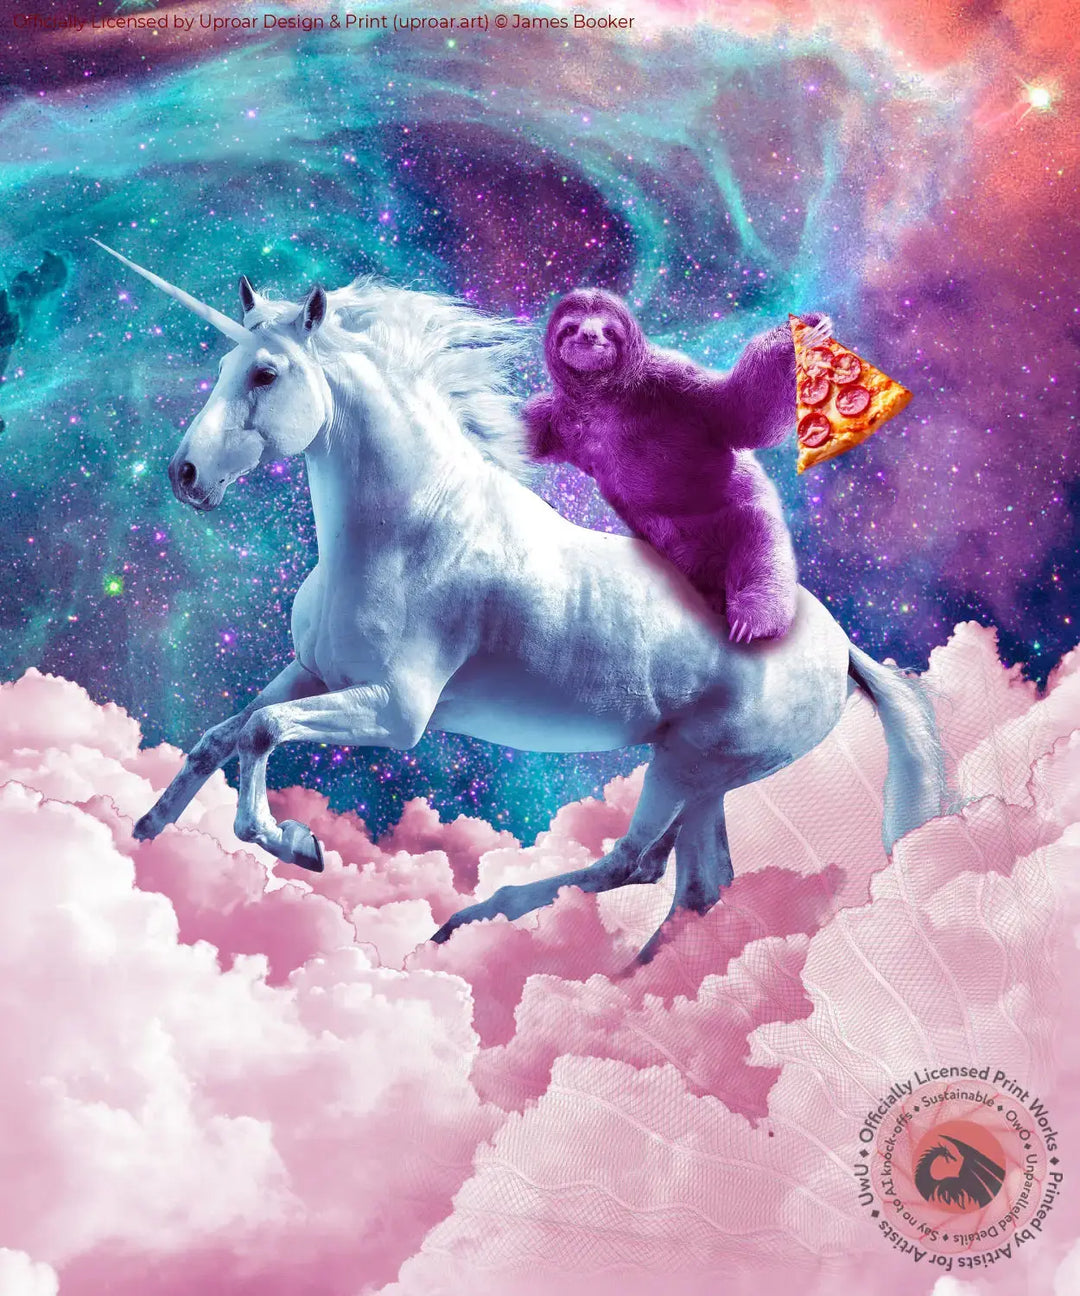 Space Sloth On Unicorn - Pizza Posters Prints & Visual Artwork